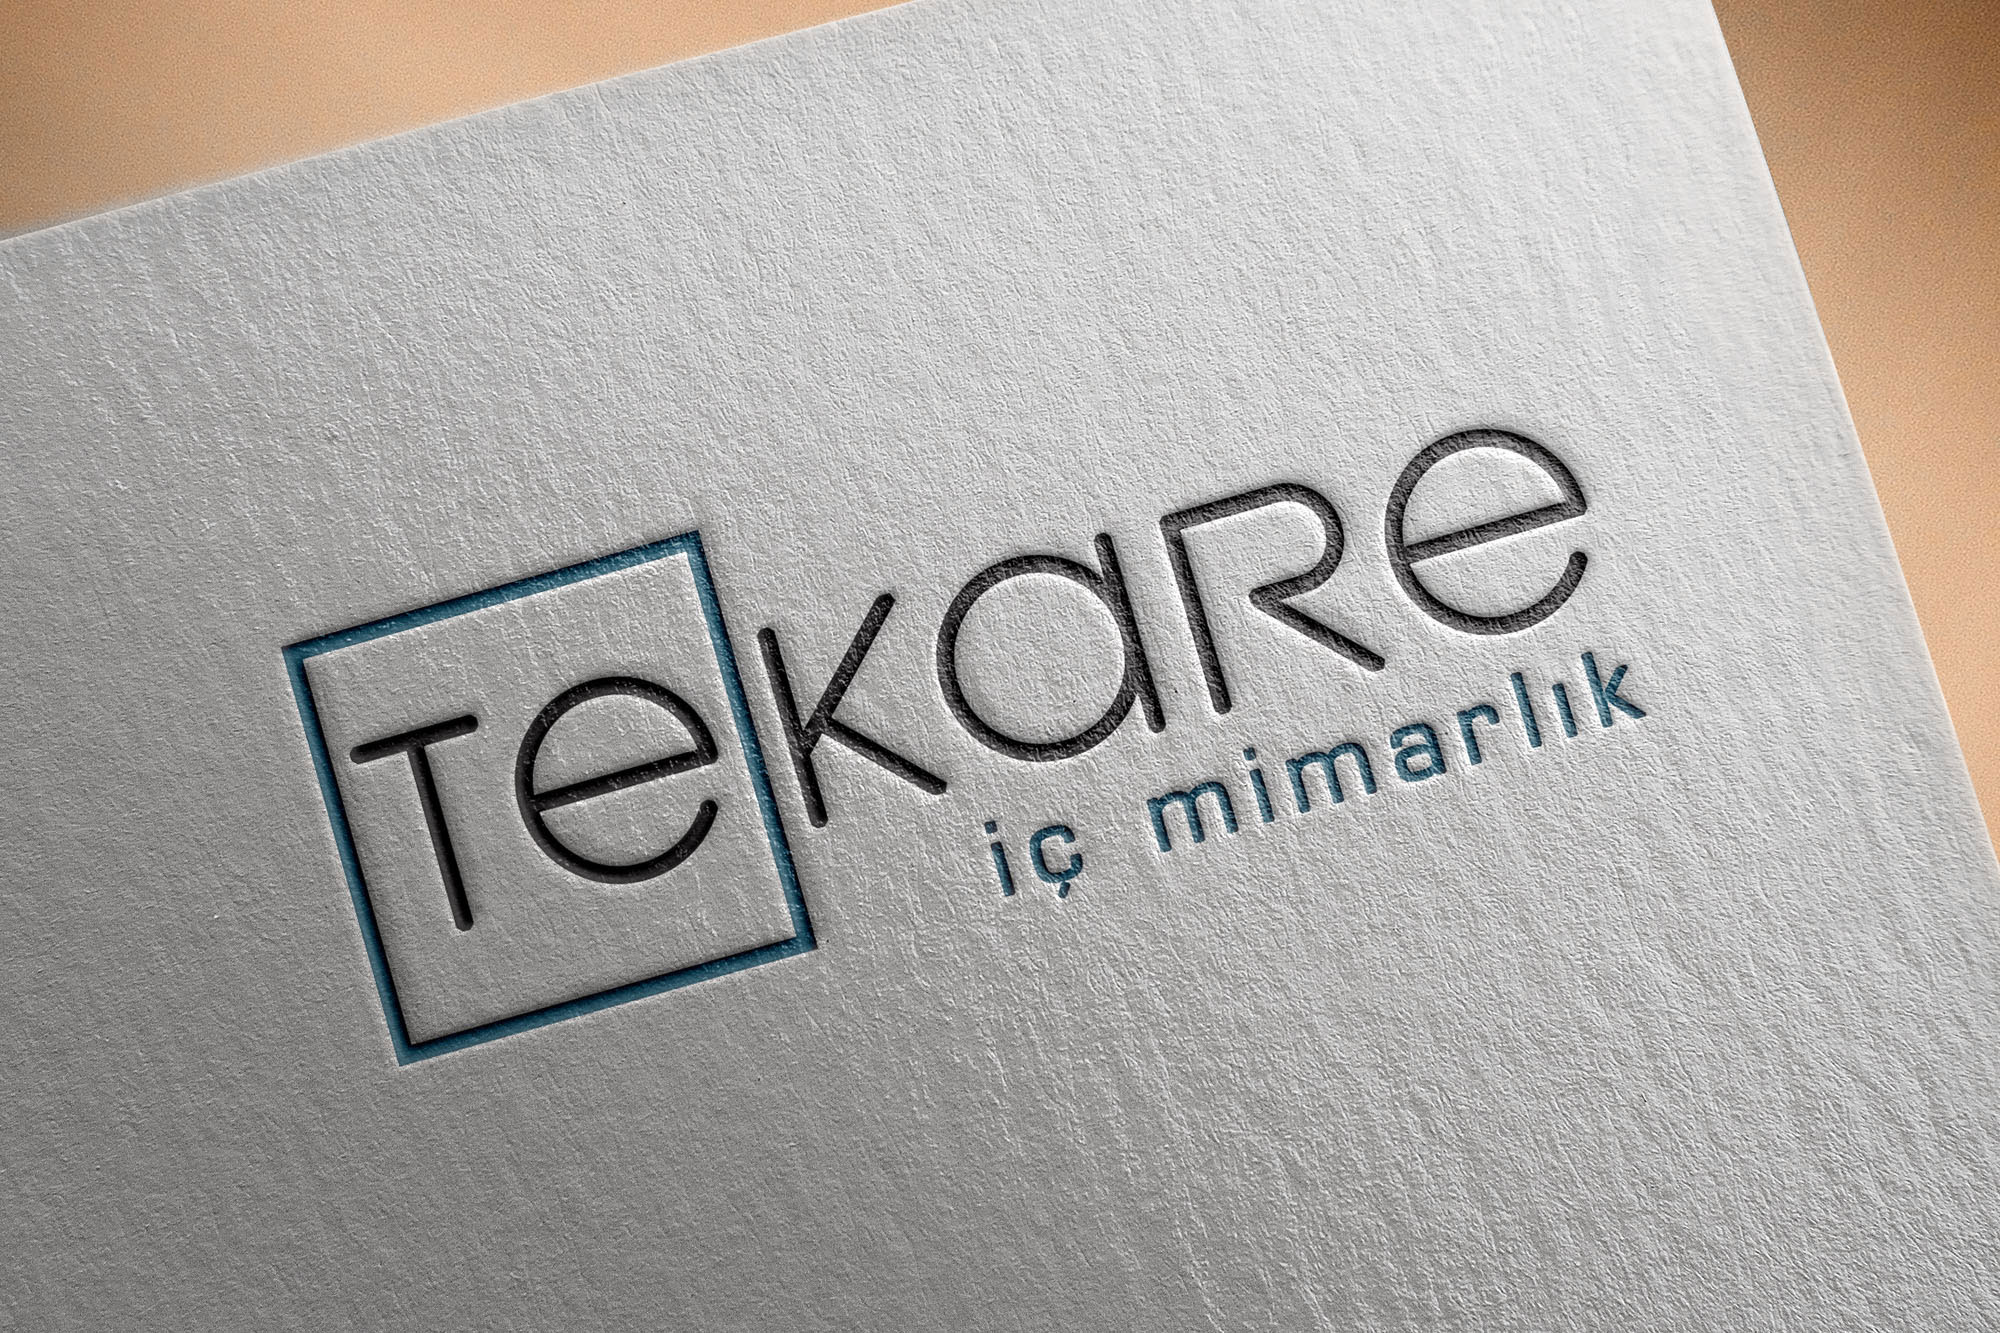 Tekare Logo and Corporate ID